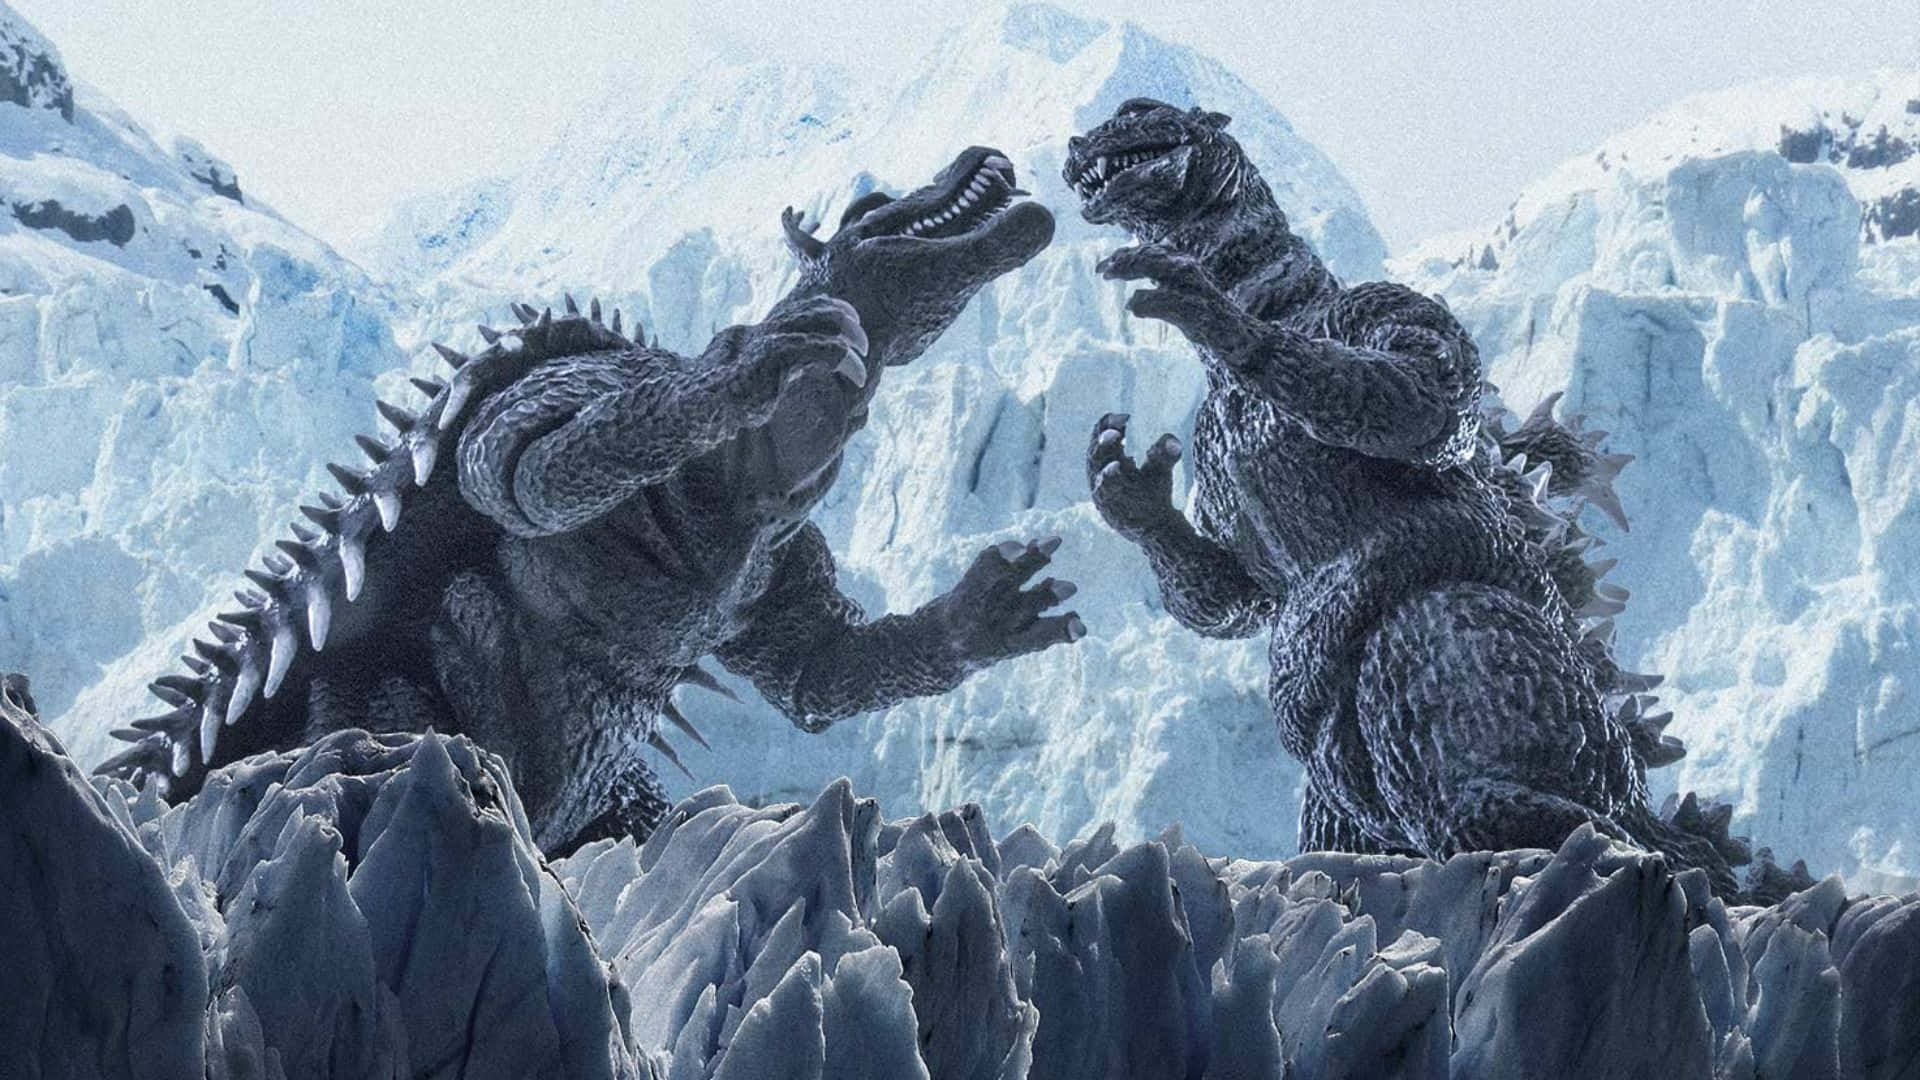 Epic Battle of Titans, Godzilla vs Anguirus Wallpaper